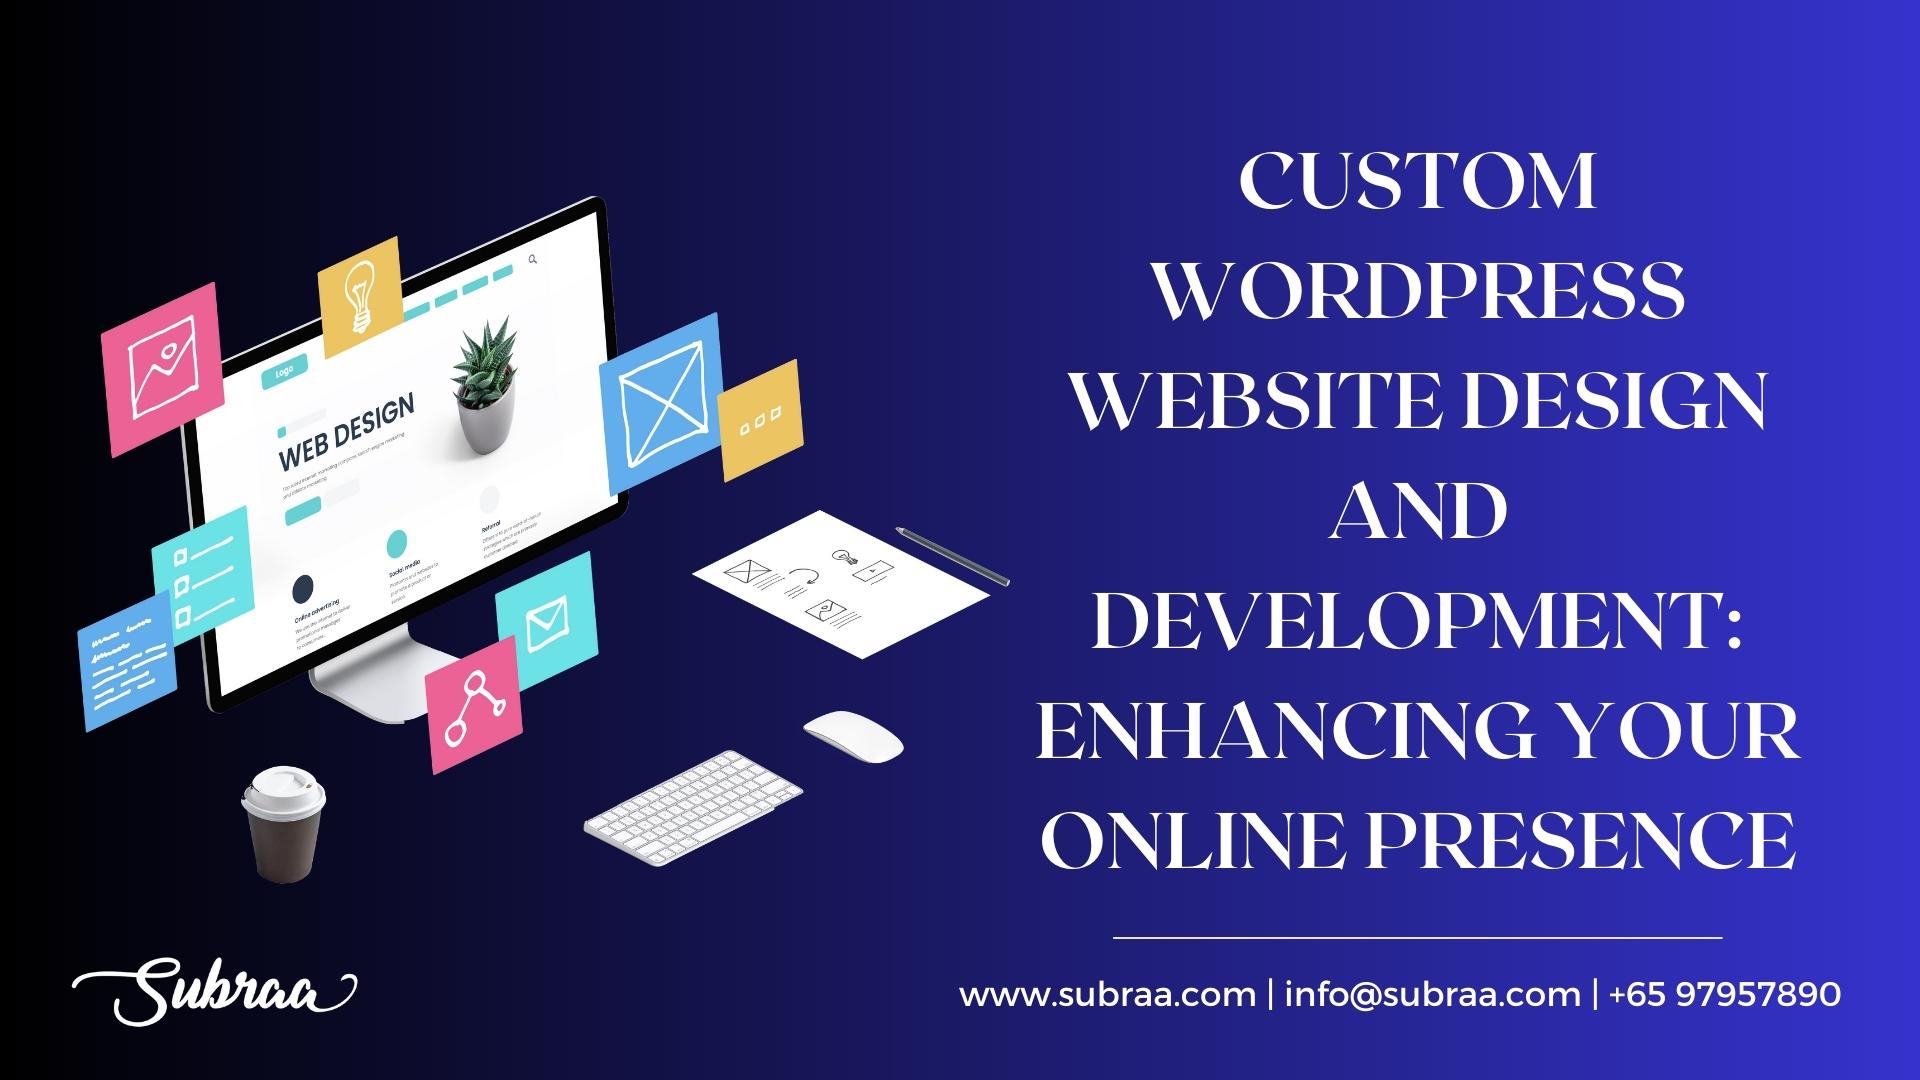 Custom WordPress Website Design and Development: Enhancing Your Online Presence